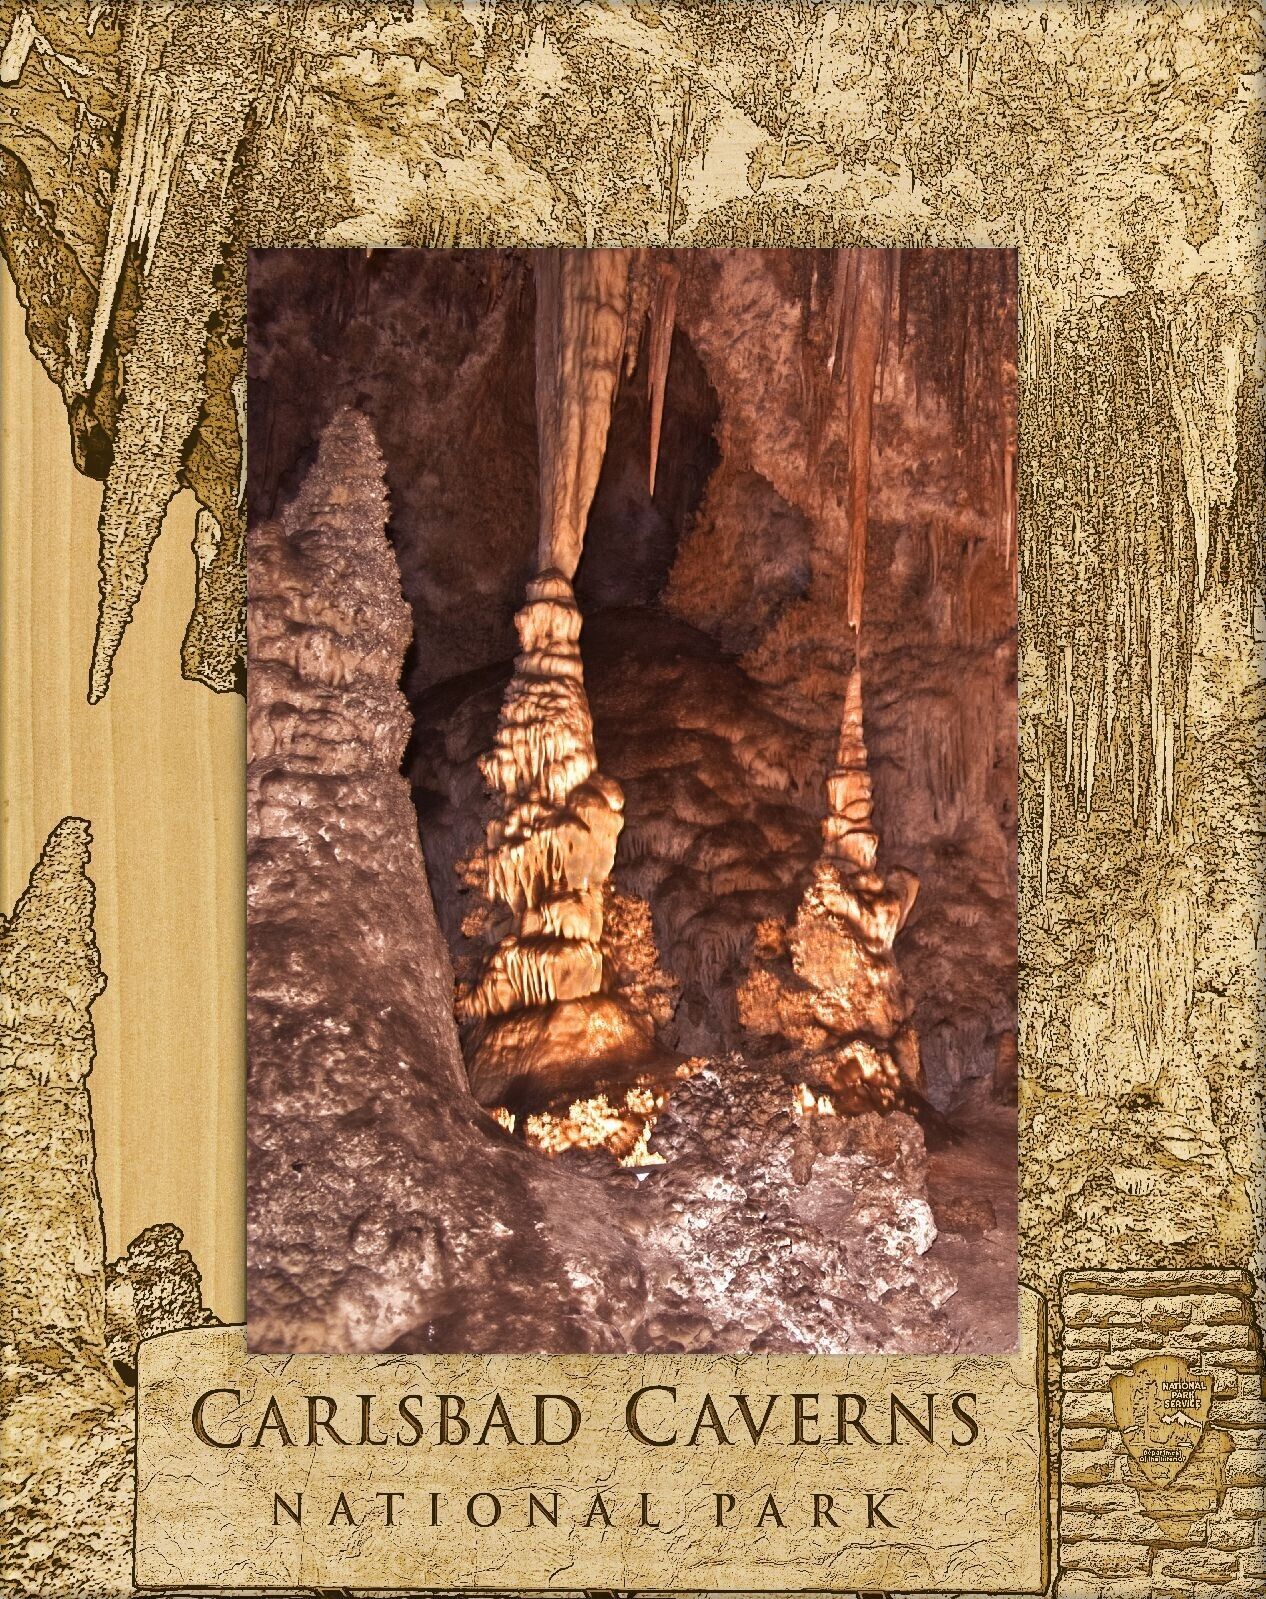 Primary image for Carlsbad Caverns National Park Laser Engraved Wood Picture Frame Portrait 8 x 10